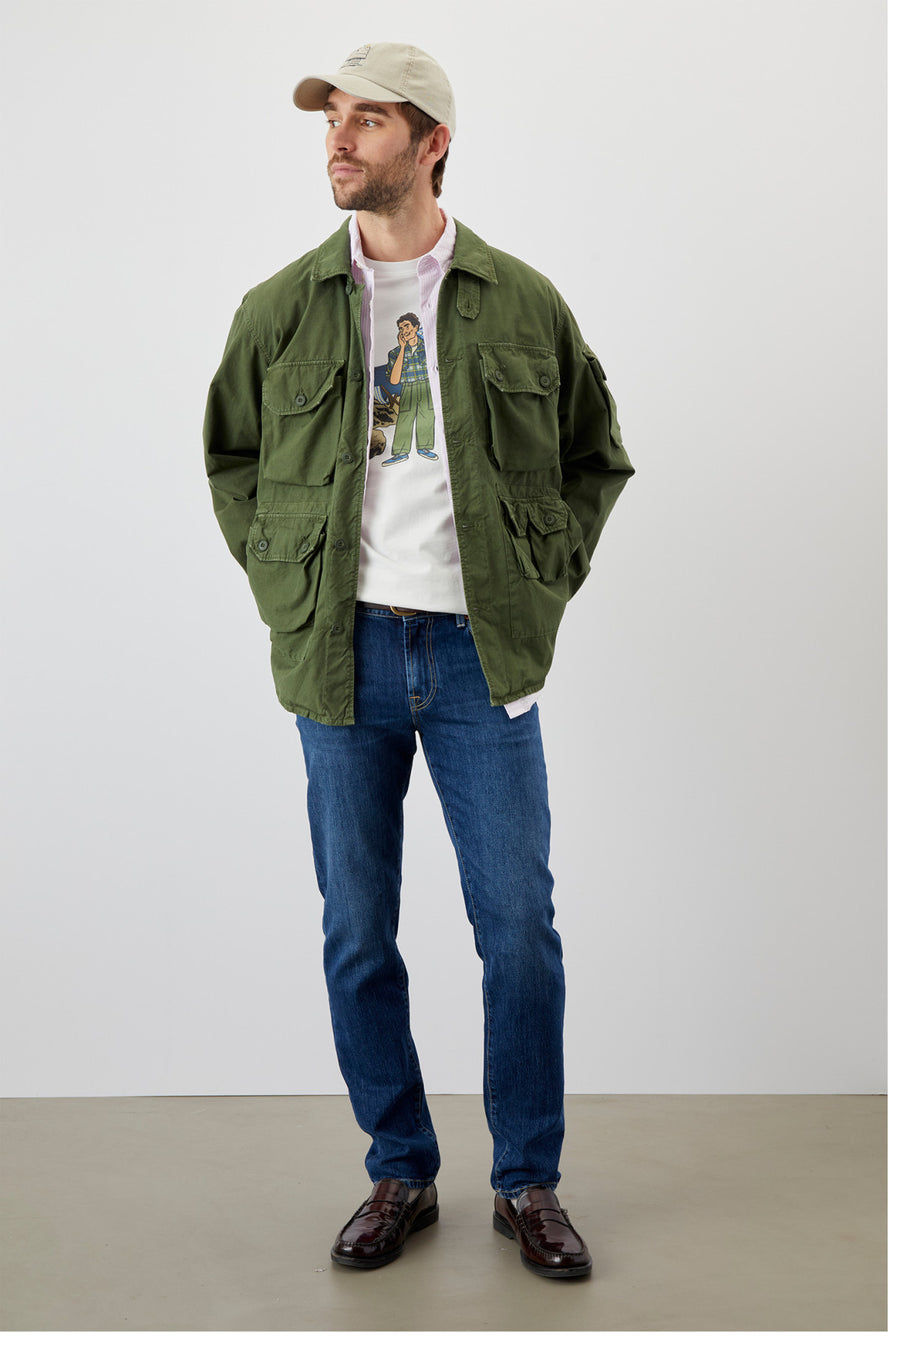 US4-517 Jeans Carlin Modal Man